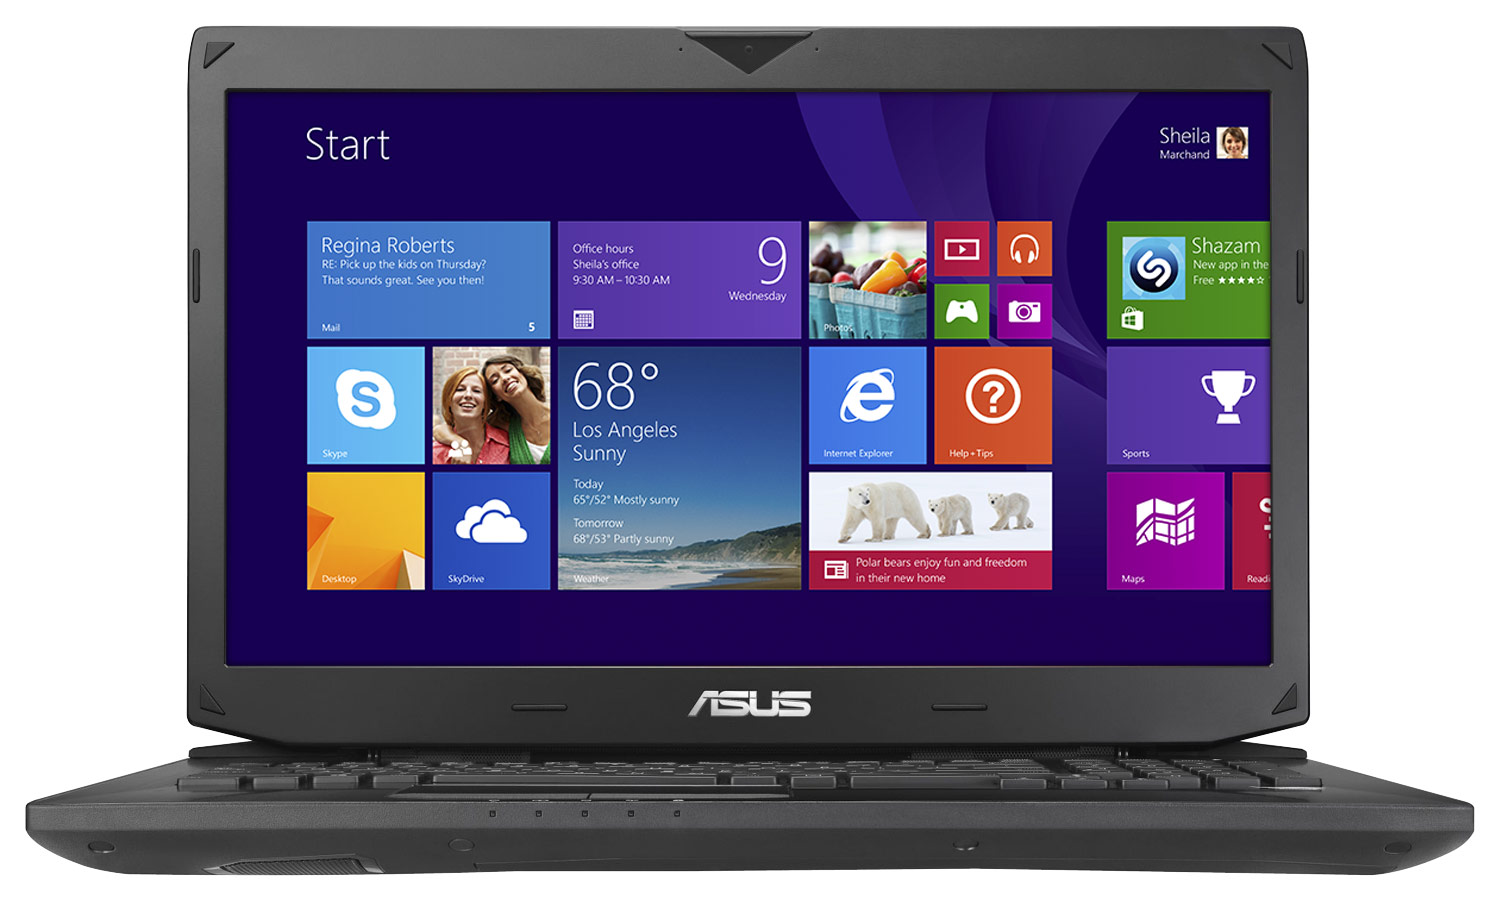 ASUS G750JS-DS71 17.3" Laptop with Intel Core i7-4700HQ / 16GB RAM / 1TB HDD + 256GB SSD / Win 8.1 / 3GB Video